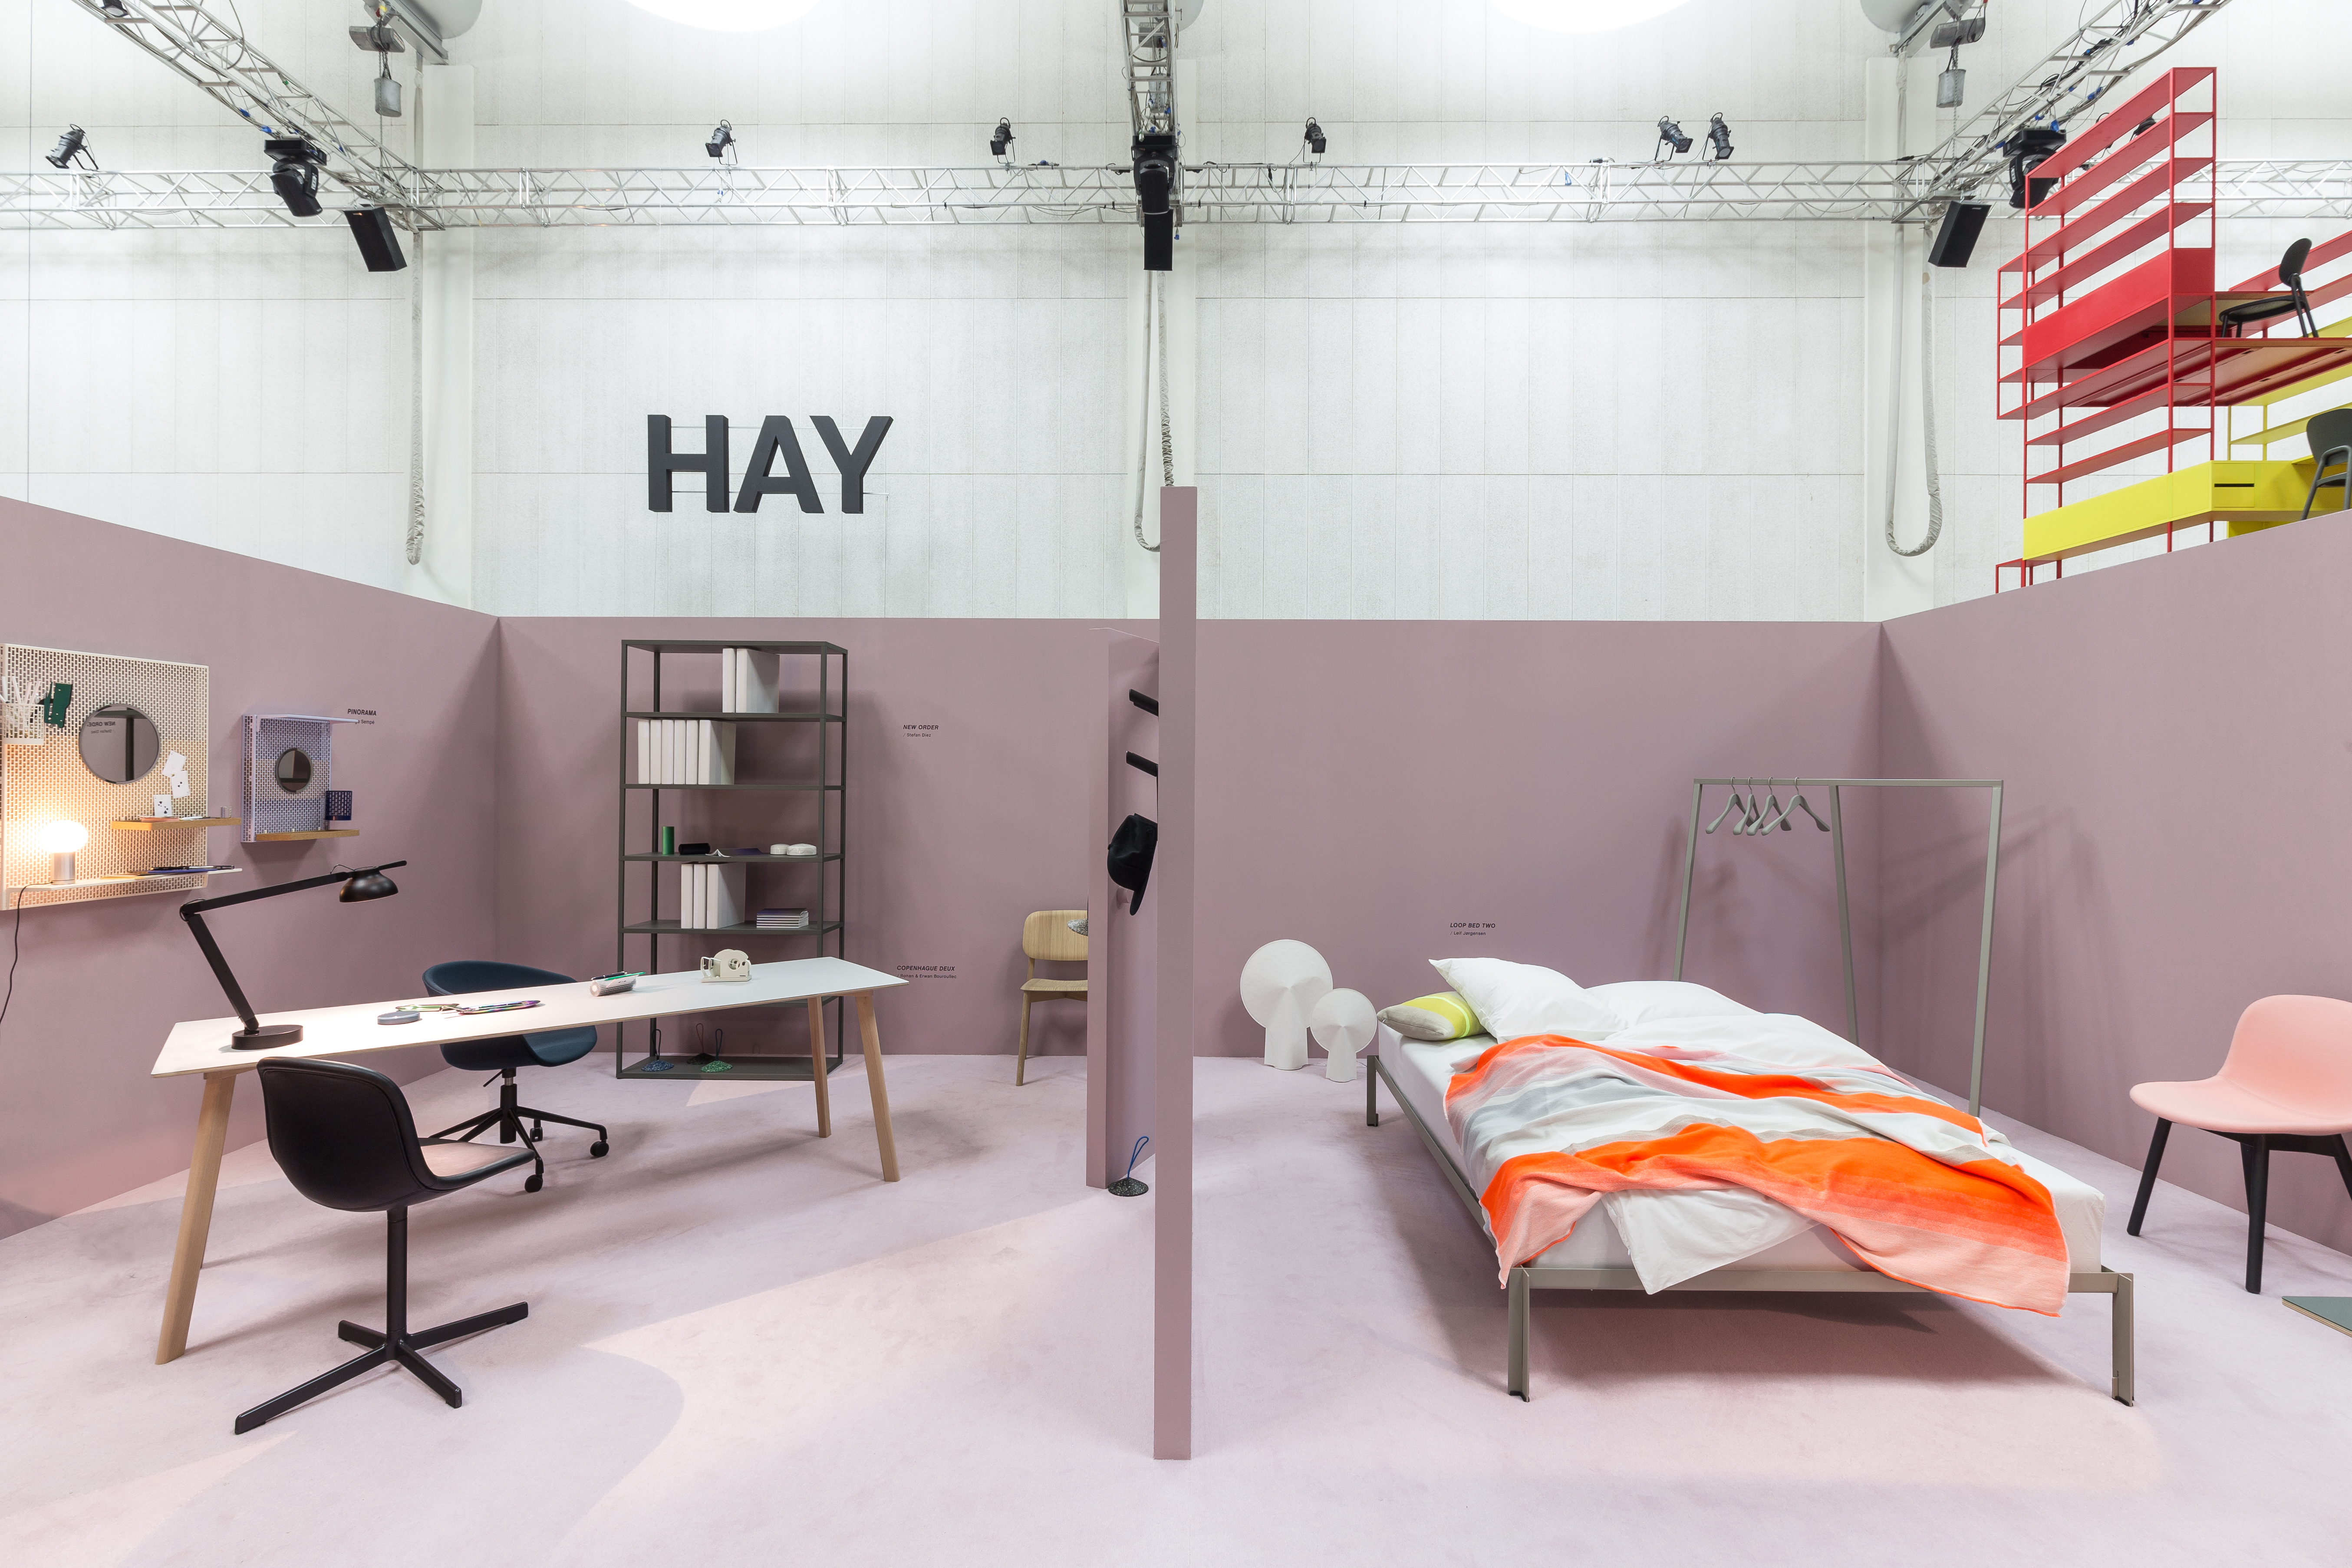 News at Hay in Milan design week 2016.